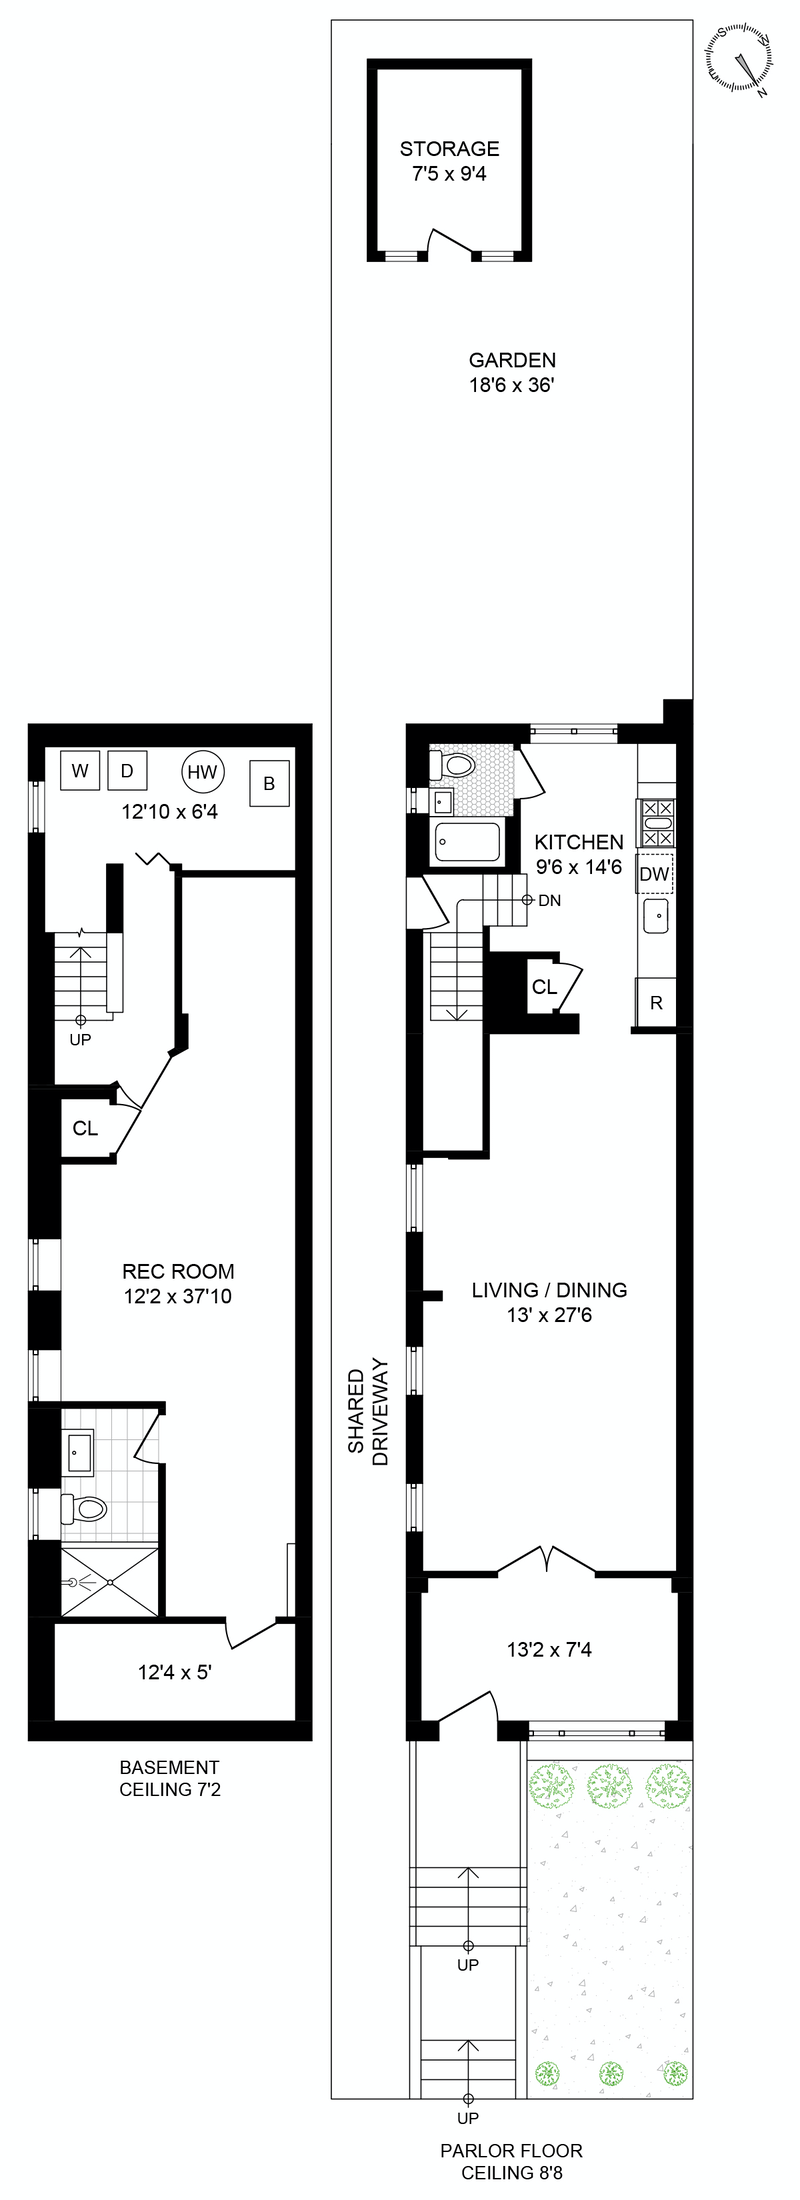 Floorplan for 978 77th Street